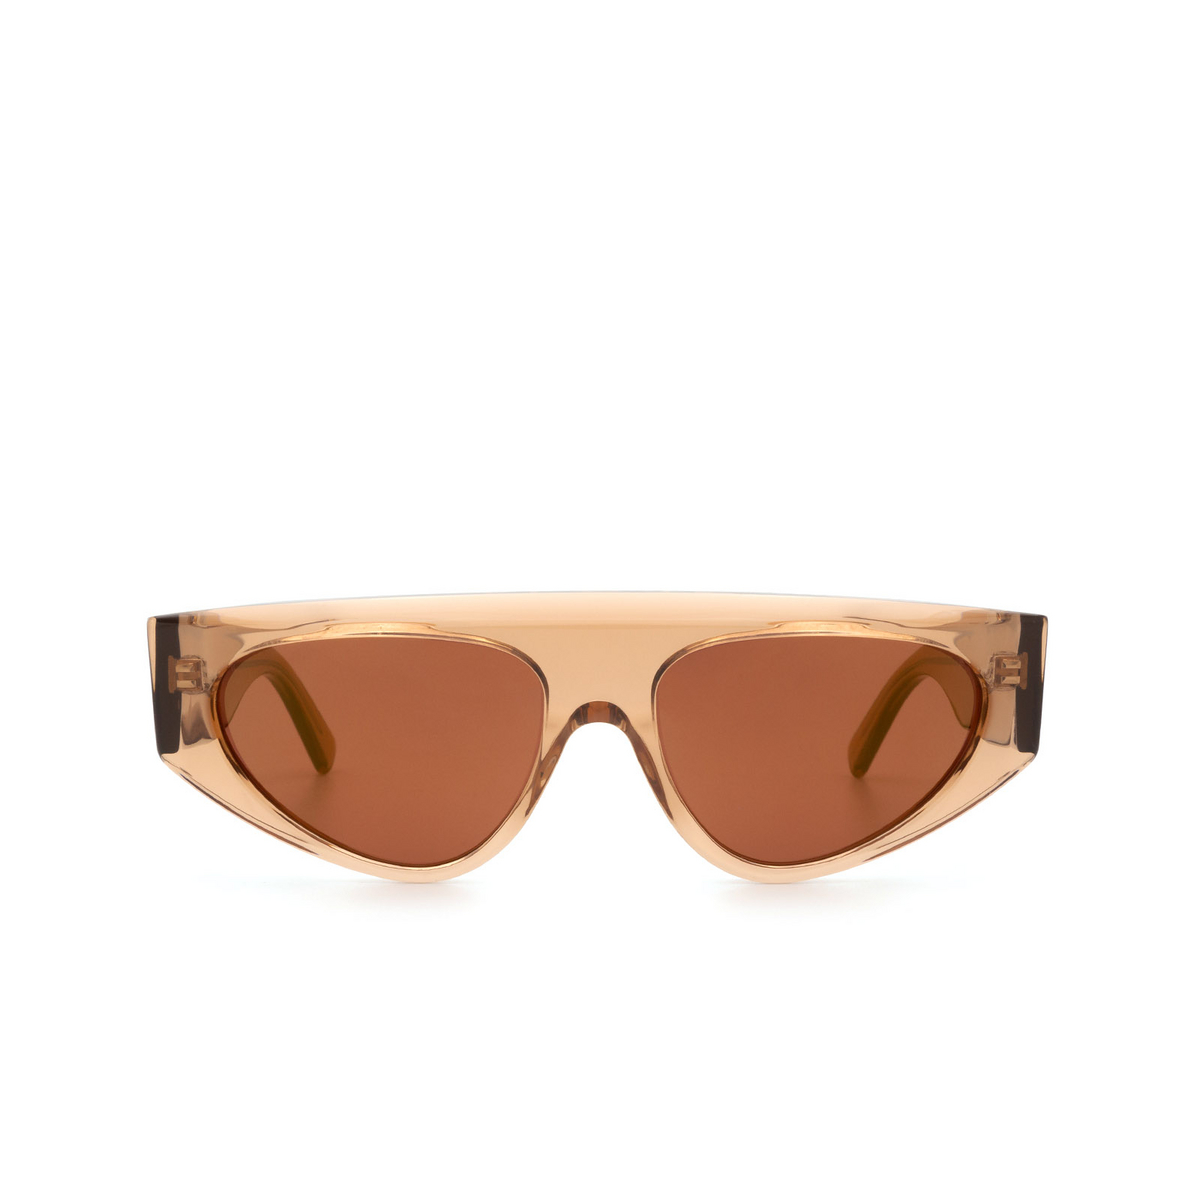 Sportmax® Irregular Sunglasses: SM0037 color Light Brown 47G - front view.